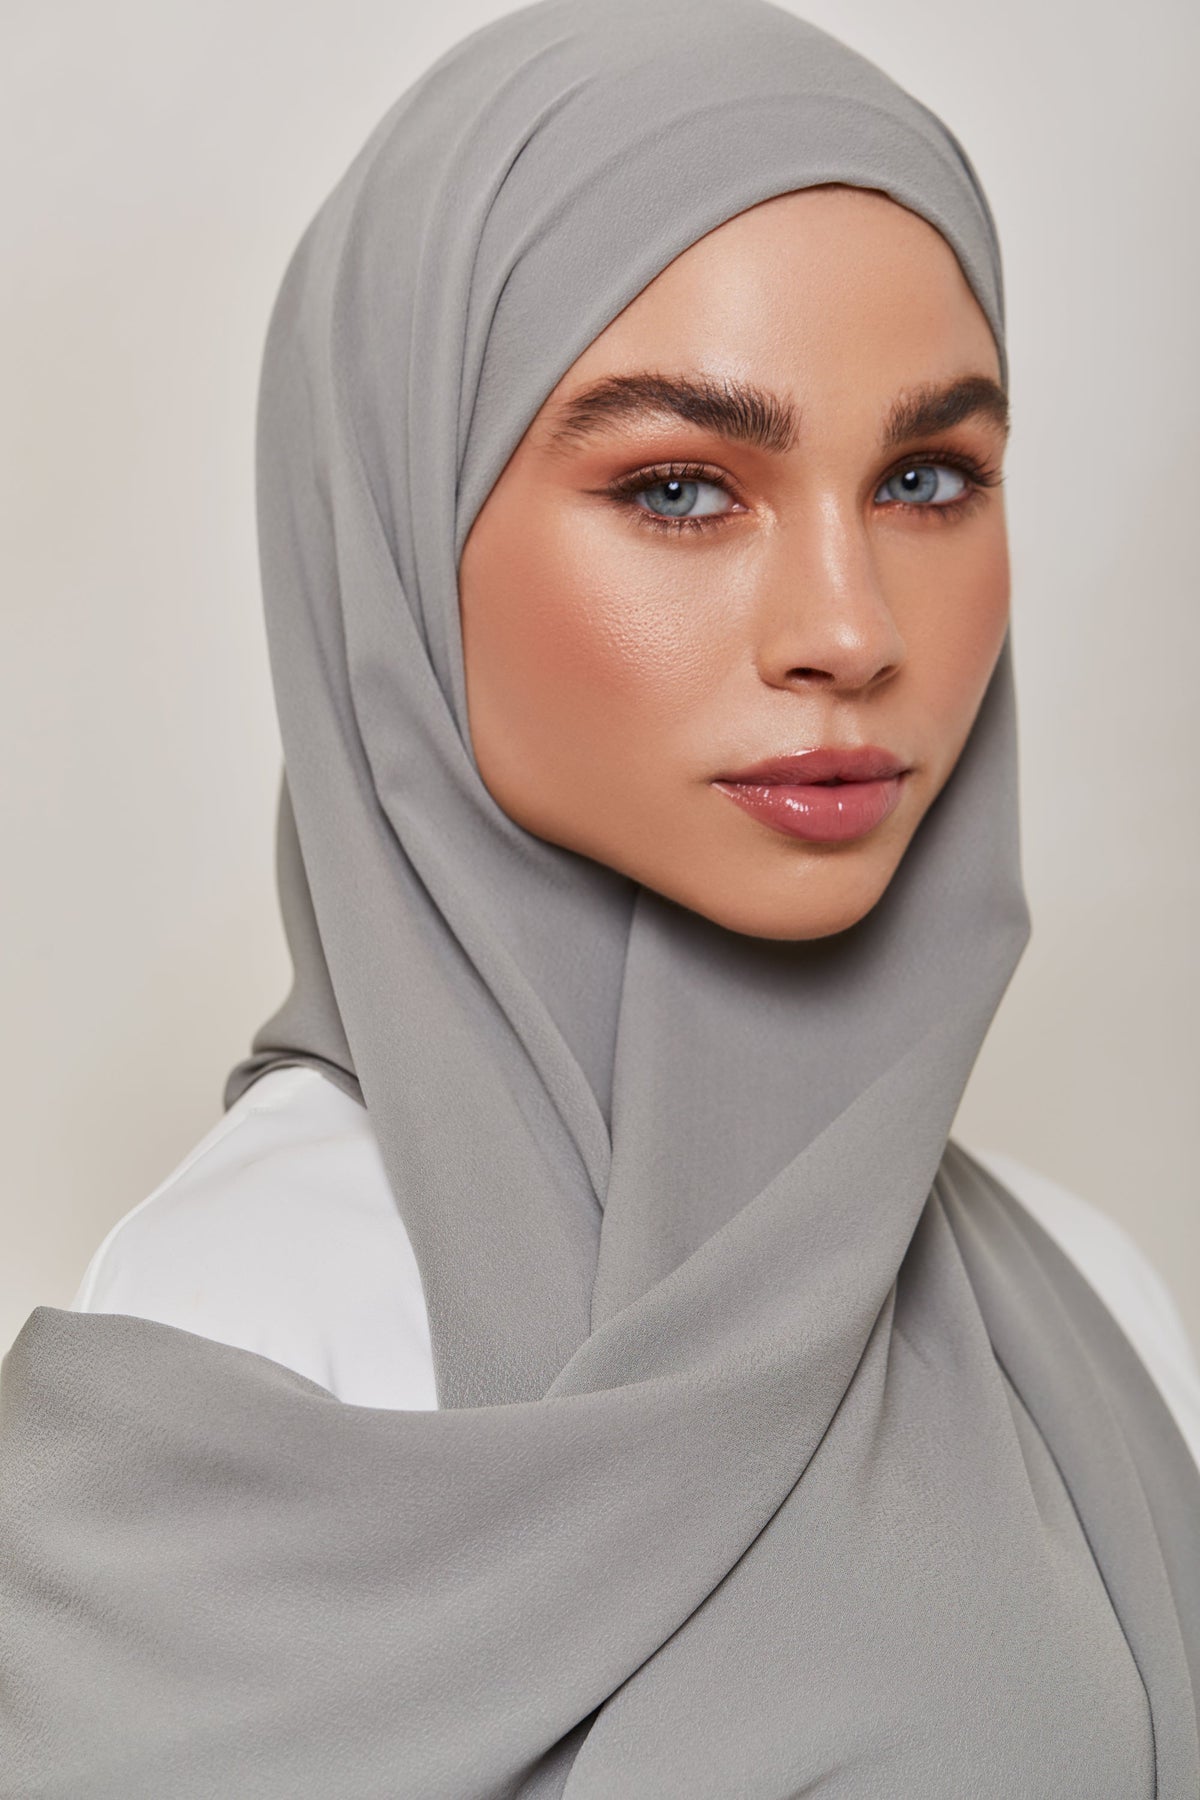 TEXTURE Everyday Chiffon Hijab - Elegant Grey epschoolboard 